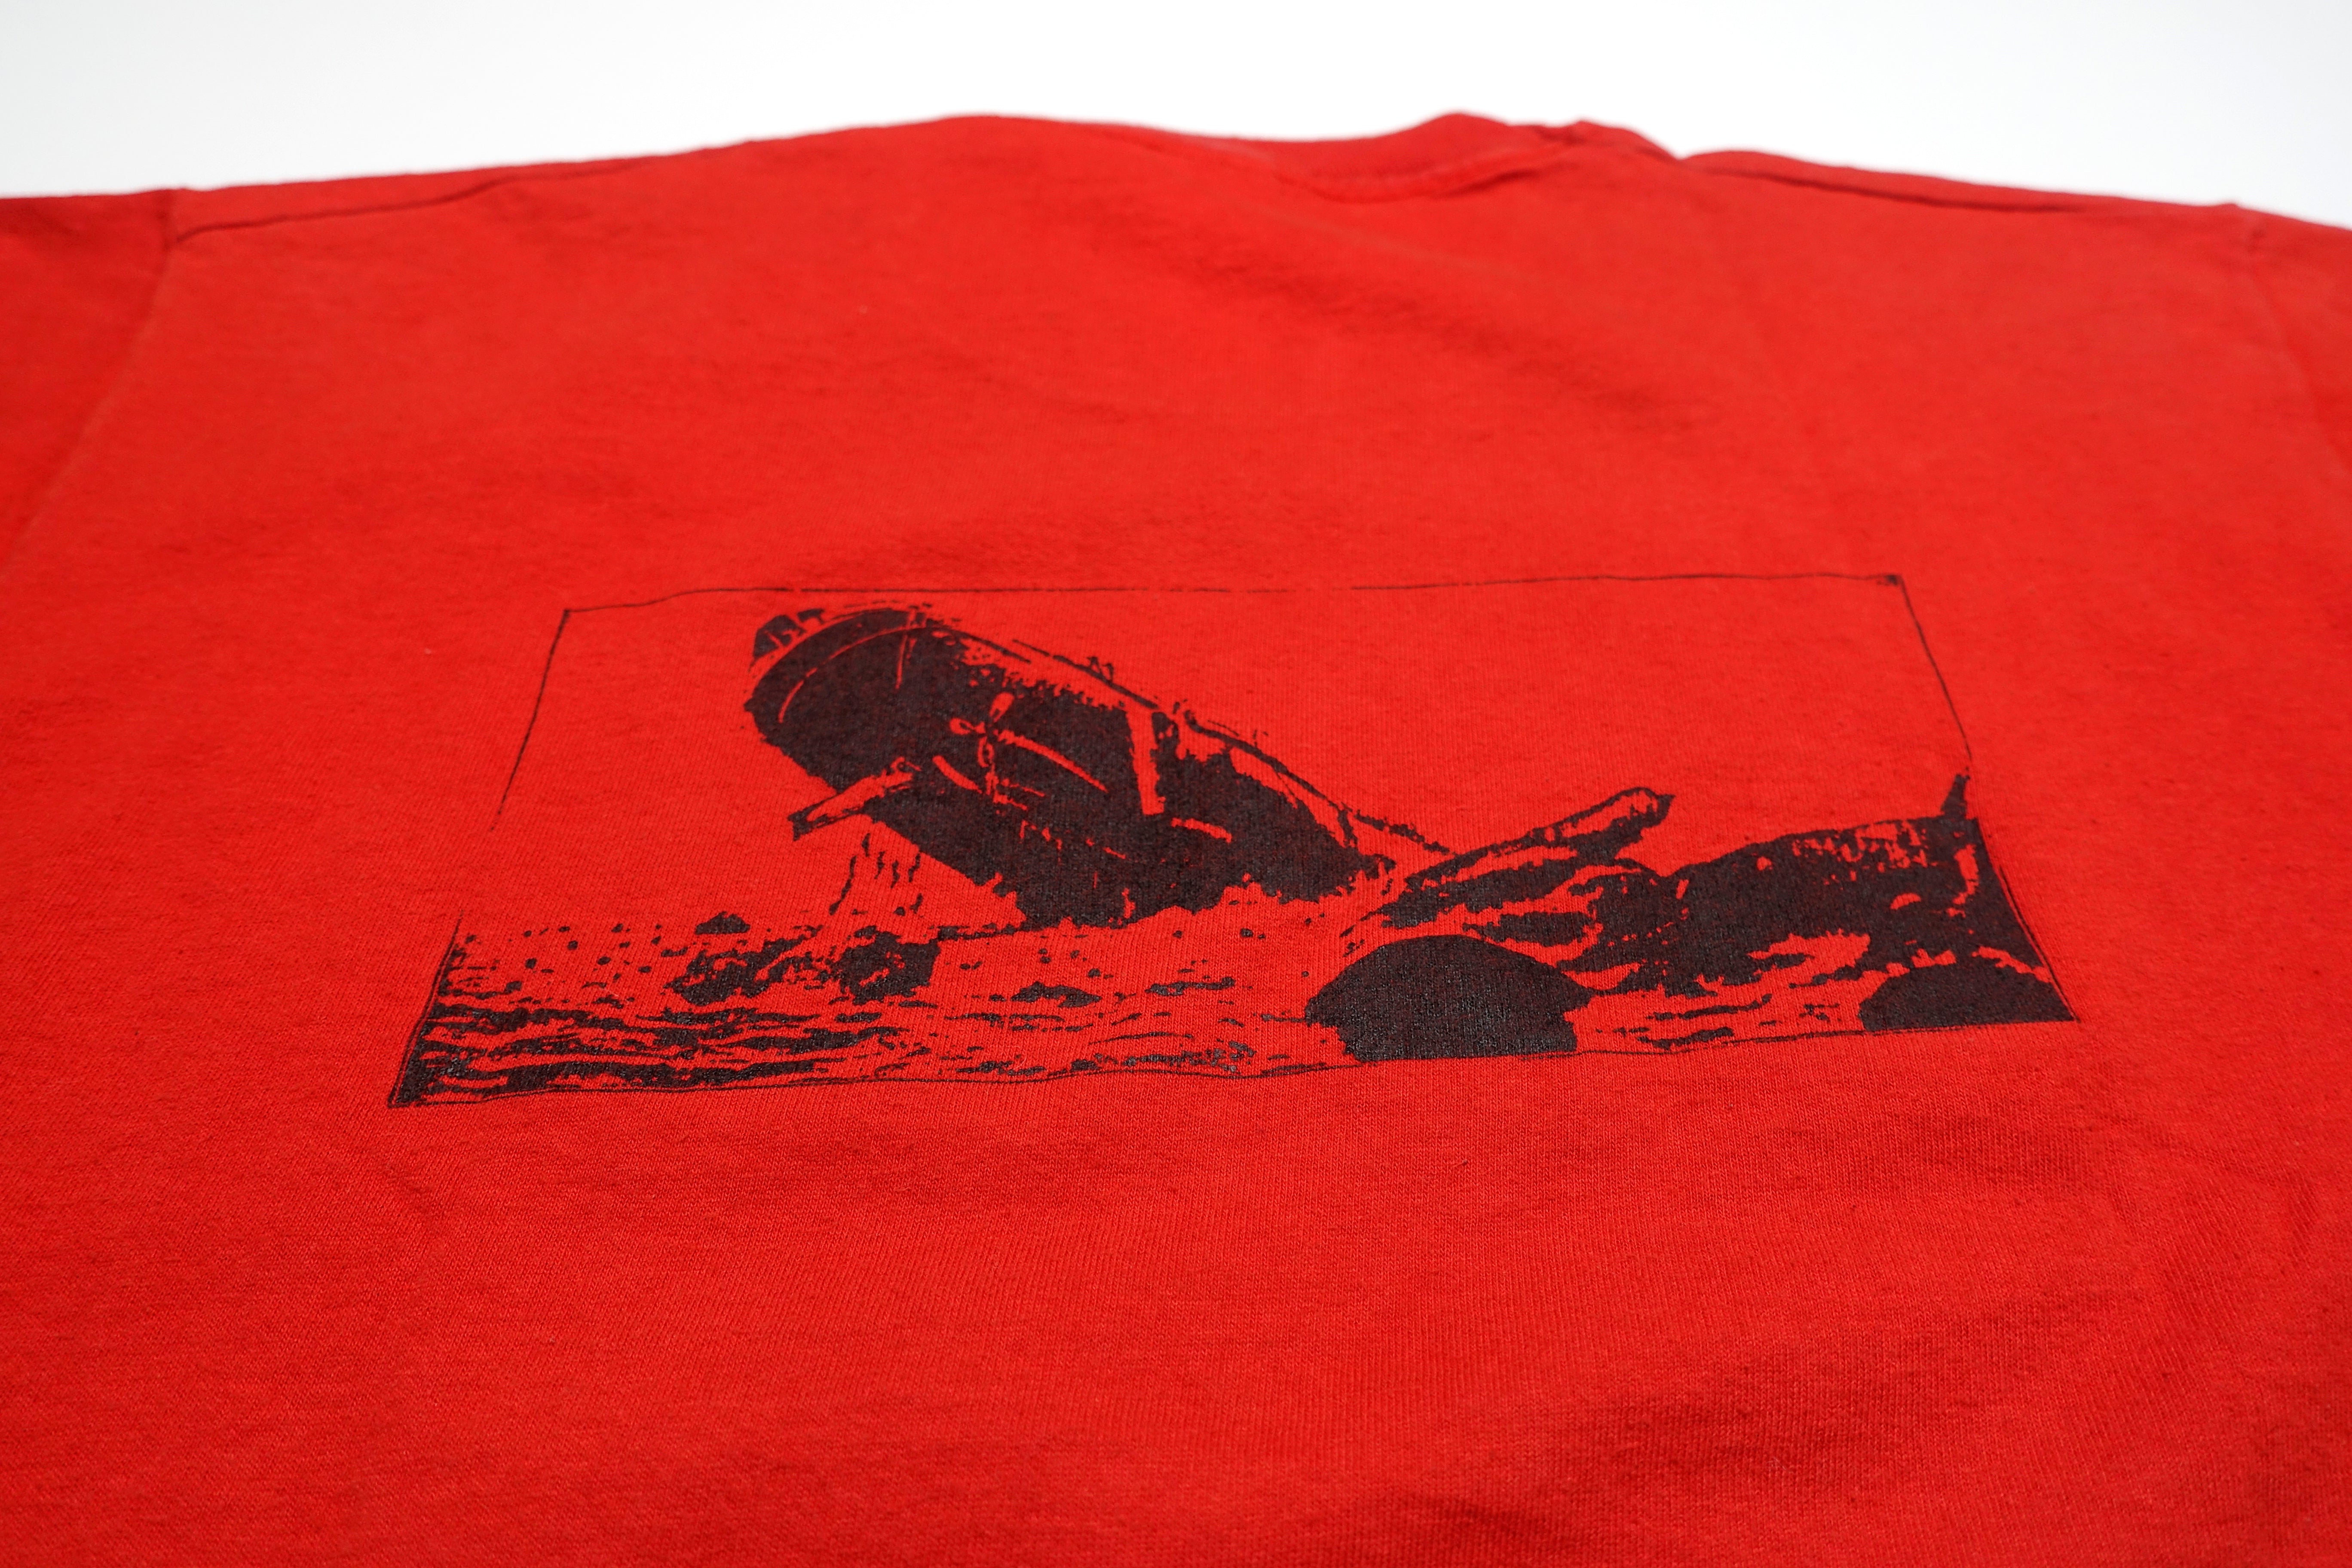 Shudder To Think - Dart Thrower 90's Red Tour Shirt Size XL